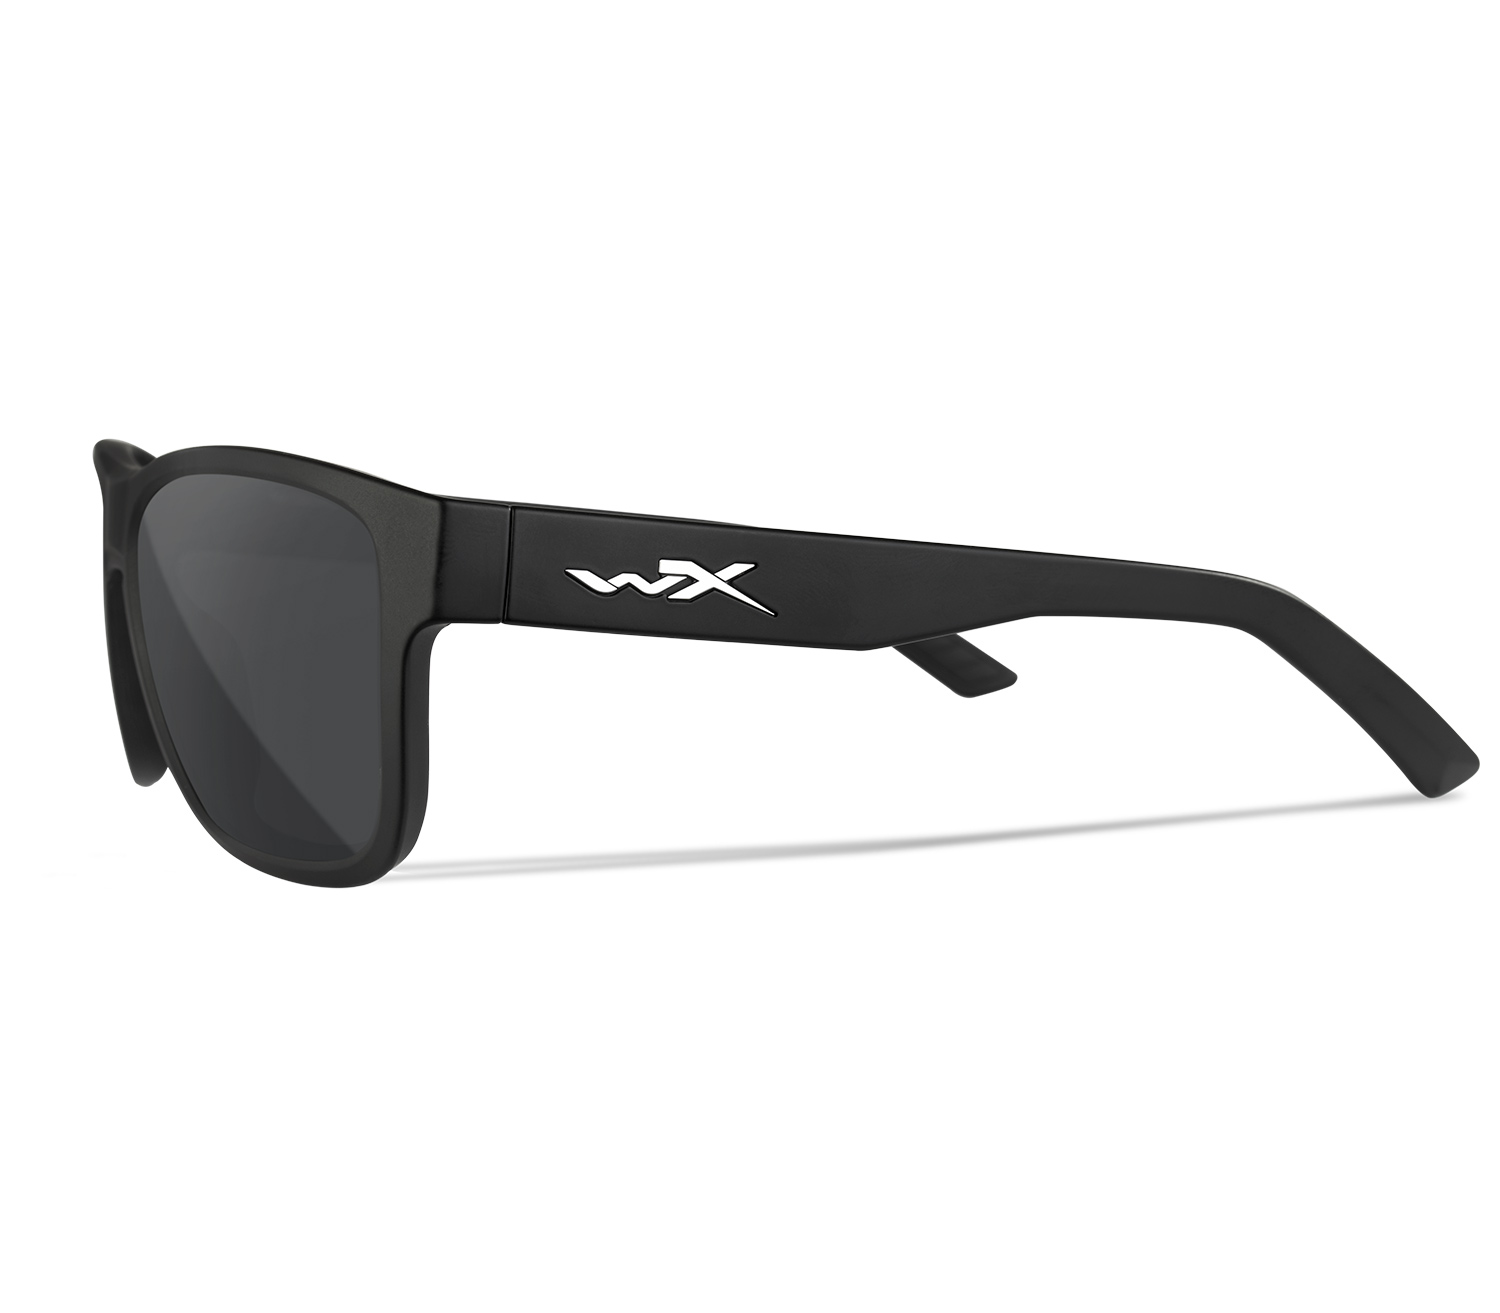 Gafas Wiley X Ovation Smoke lateral